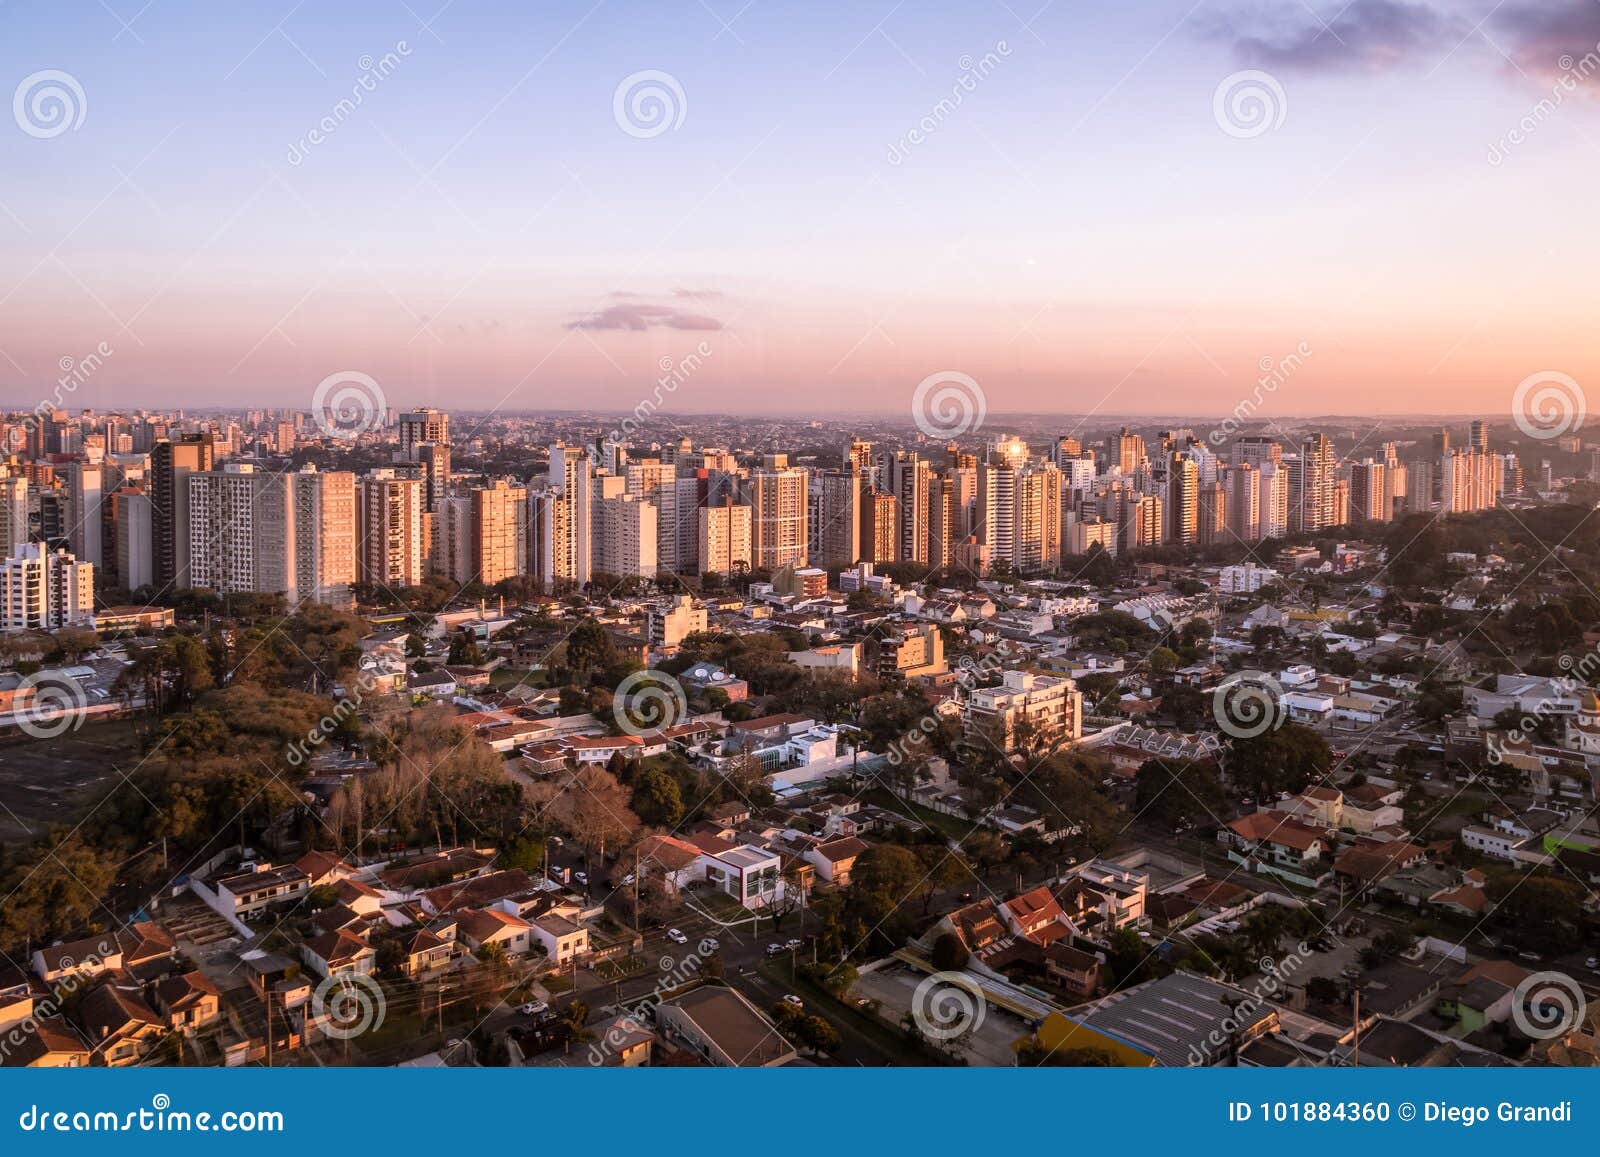 aerial view of curitiba city - curitiba, parana, brazil